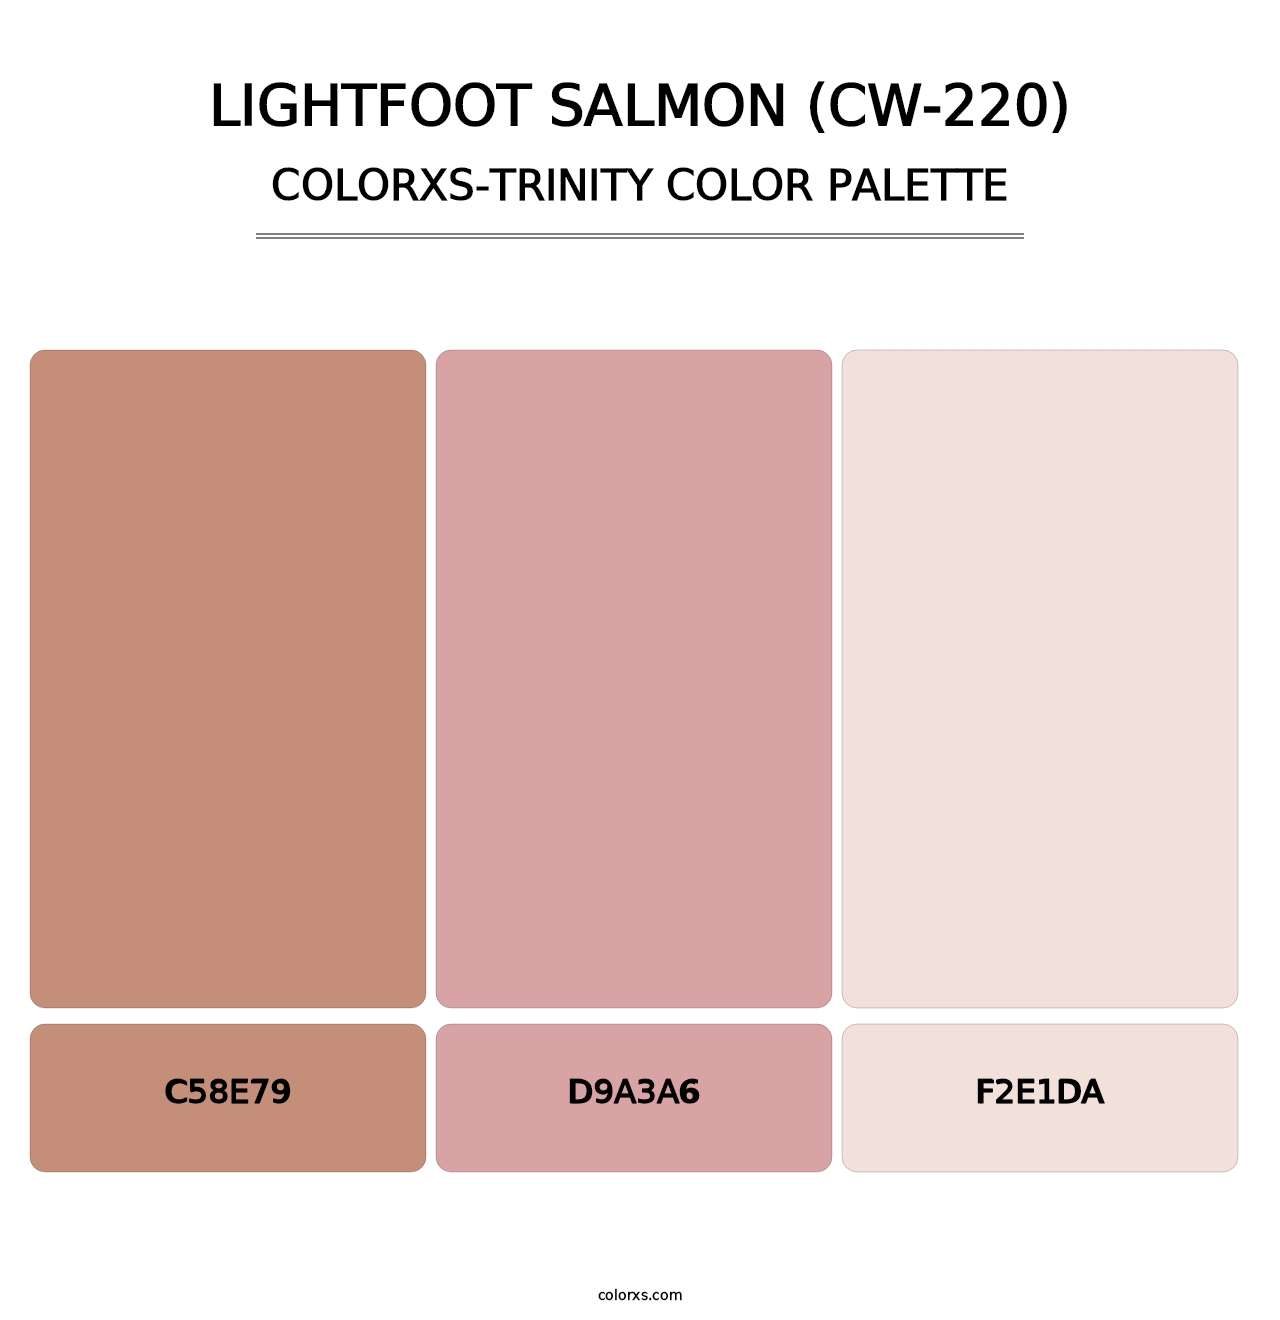 Lightfoot Salmon (CW-220) - Colorxs Trinity Palette